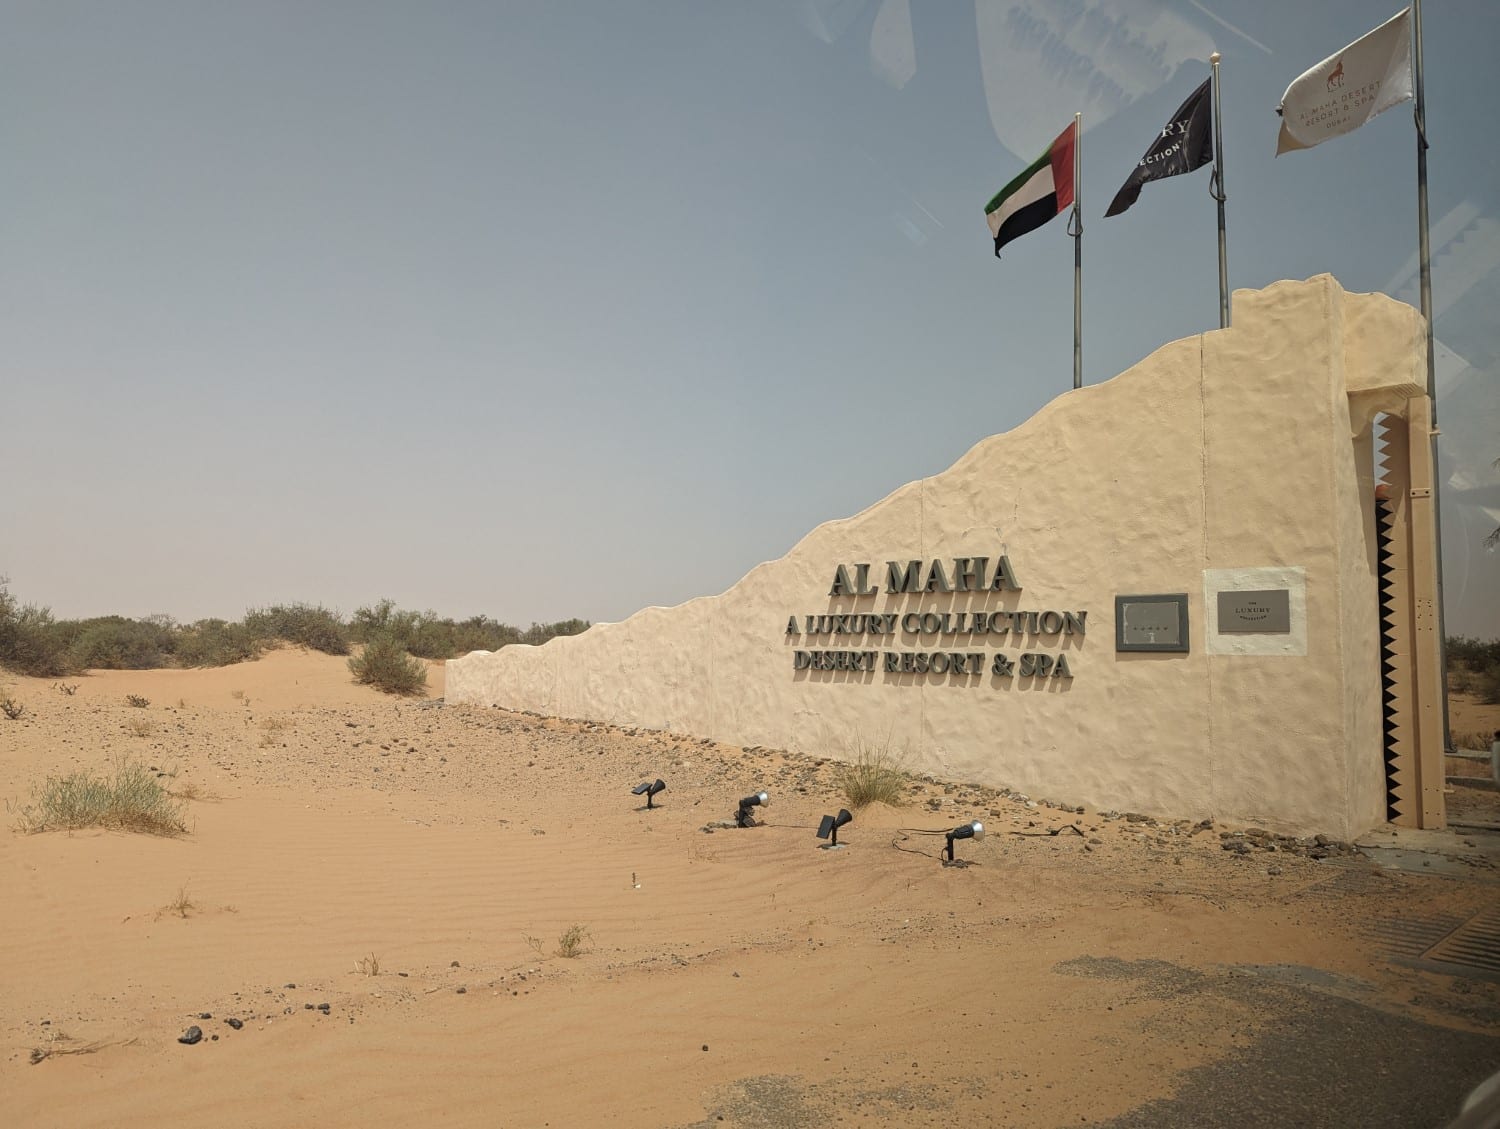 Entrance gates to Al Maha, a Luxury Collection Desert Resort & Spa